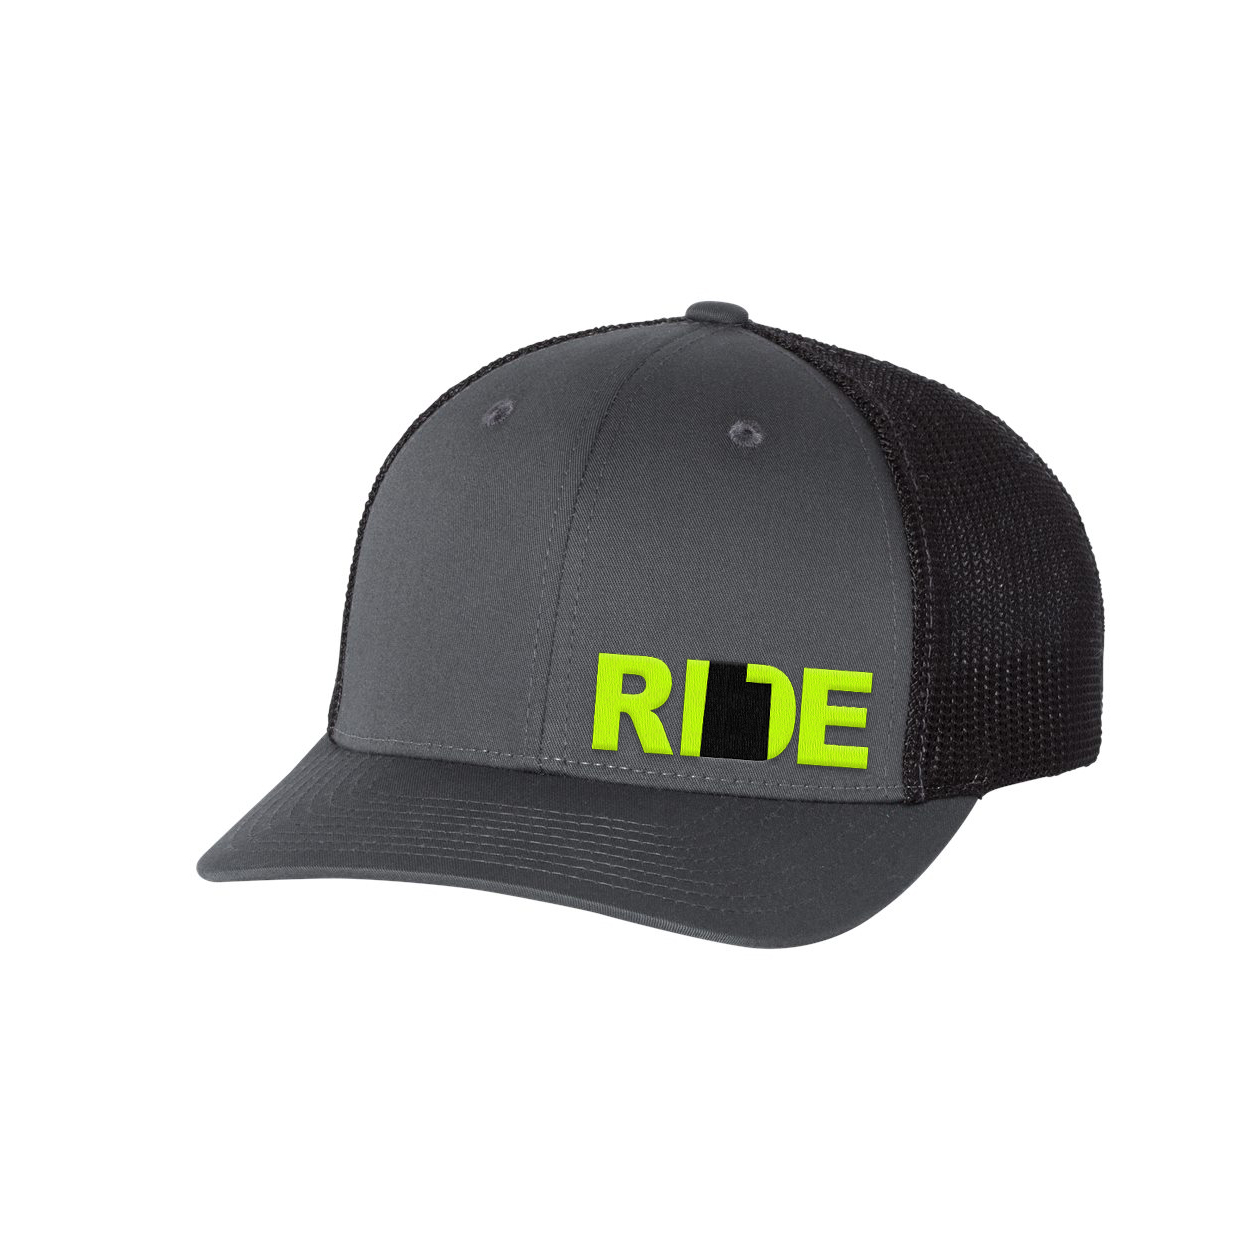 Ride Utah Night Out Embroidered Snapback Trucker Hat Gray/Black/Hi-Vis